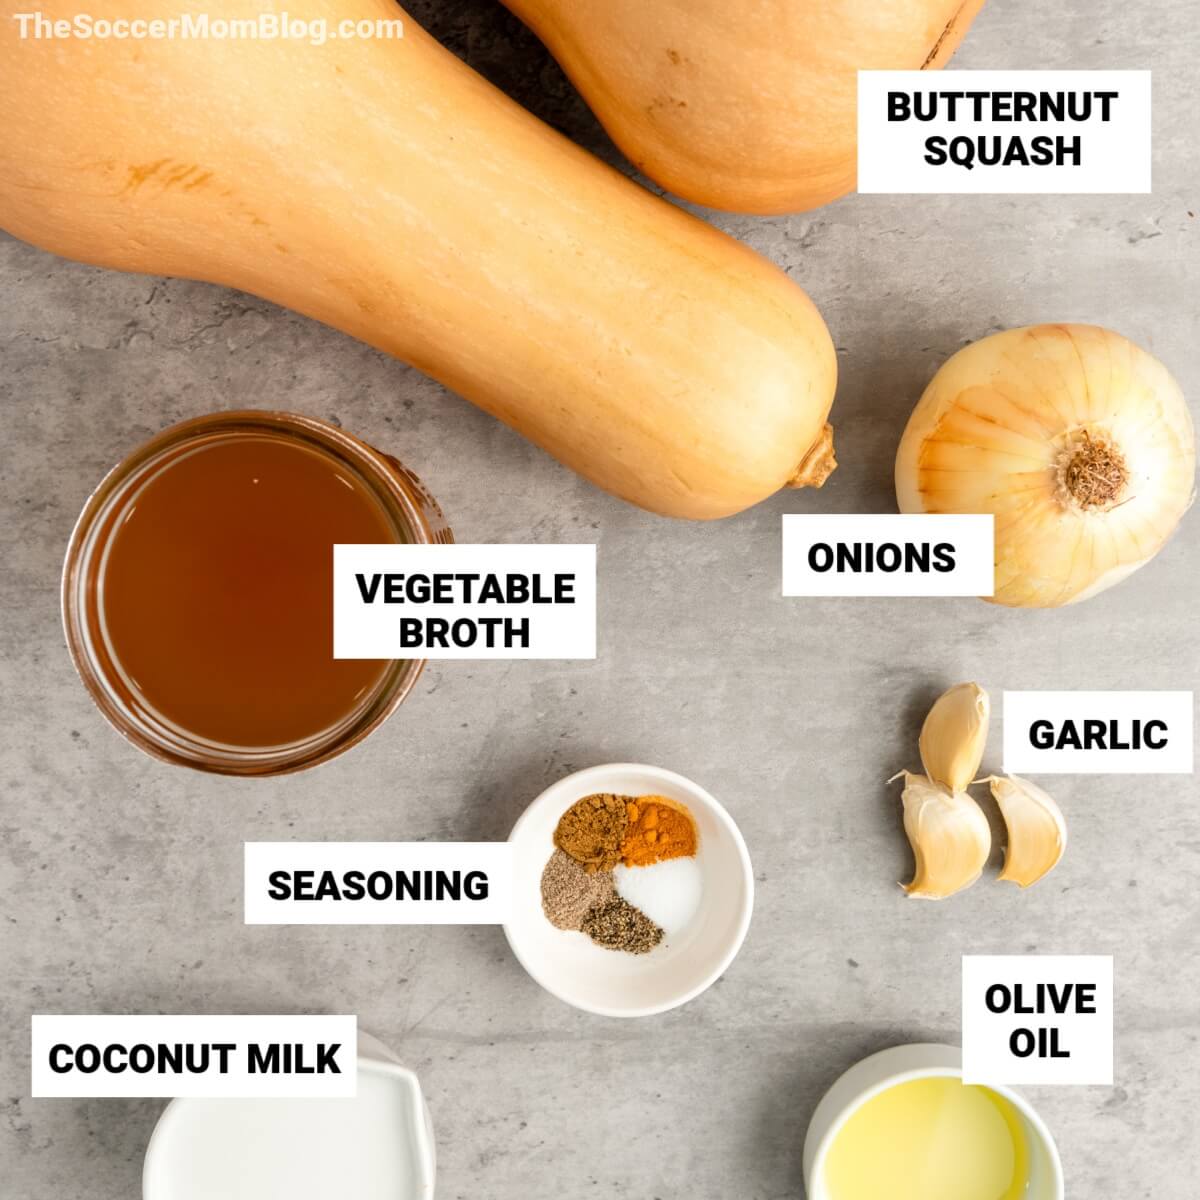 Butternut Squash Soup ingredients: butternut squash, onions, vegetable broth, garlic, olive oil, coconut milk, seasoning.